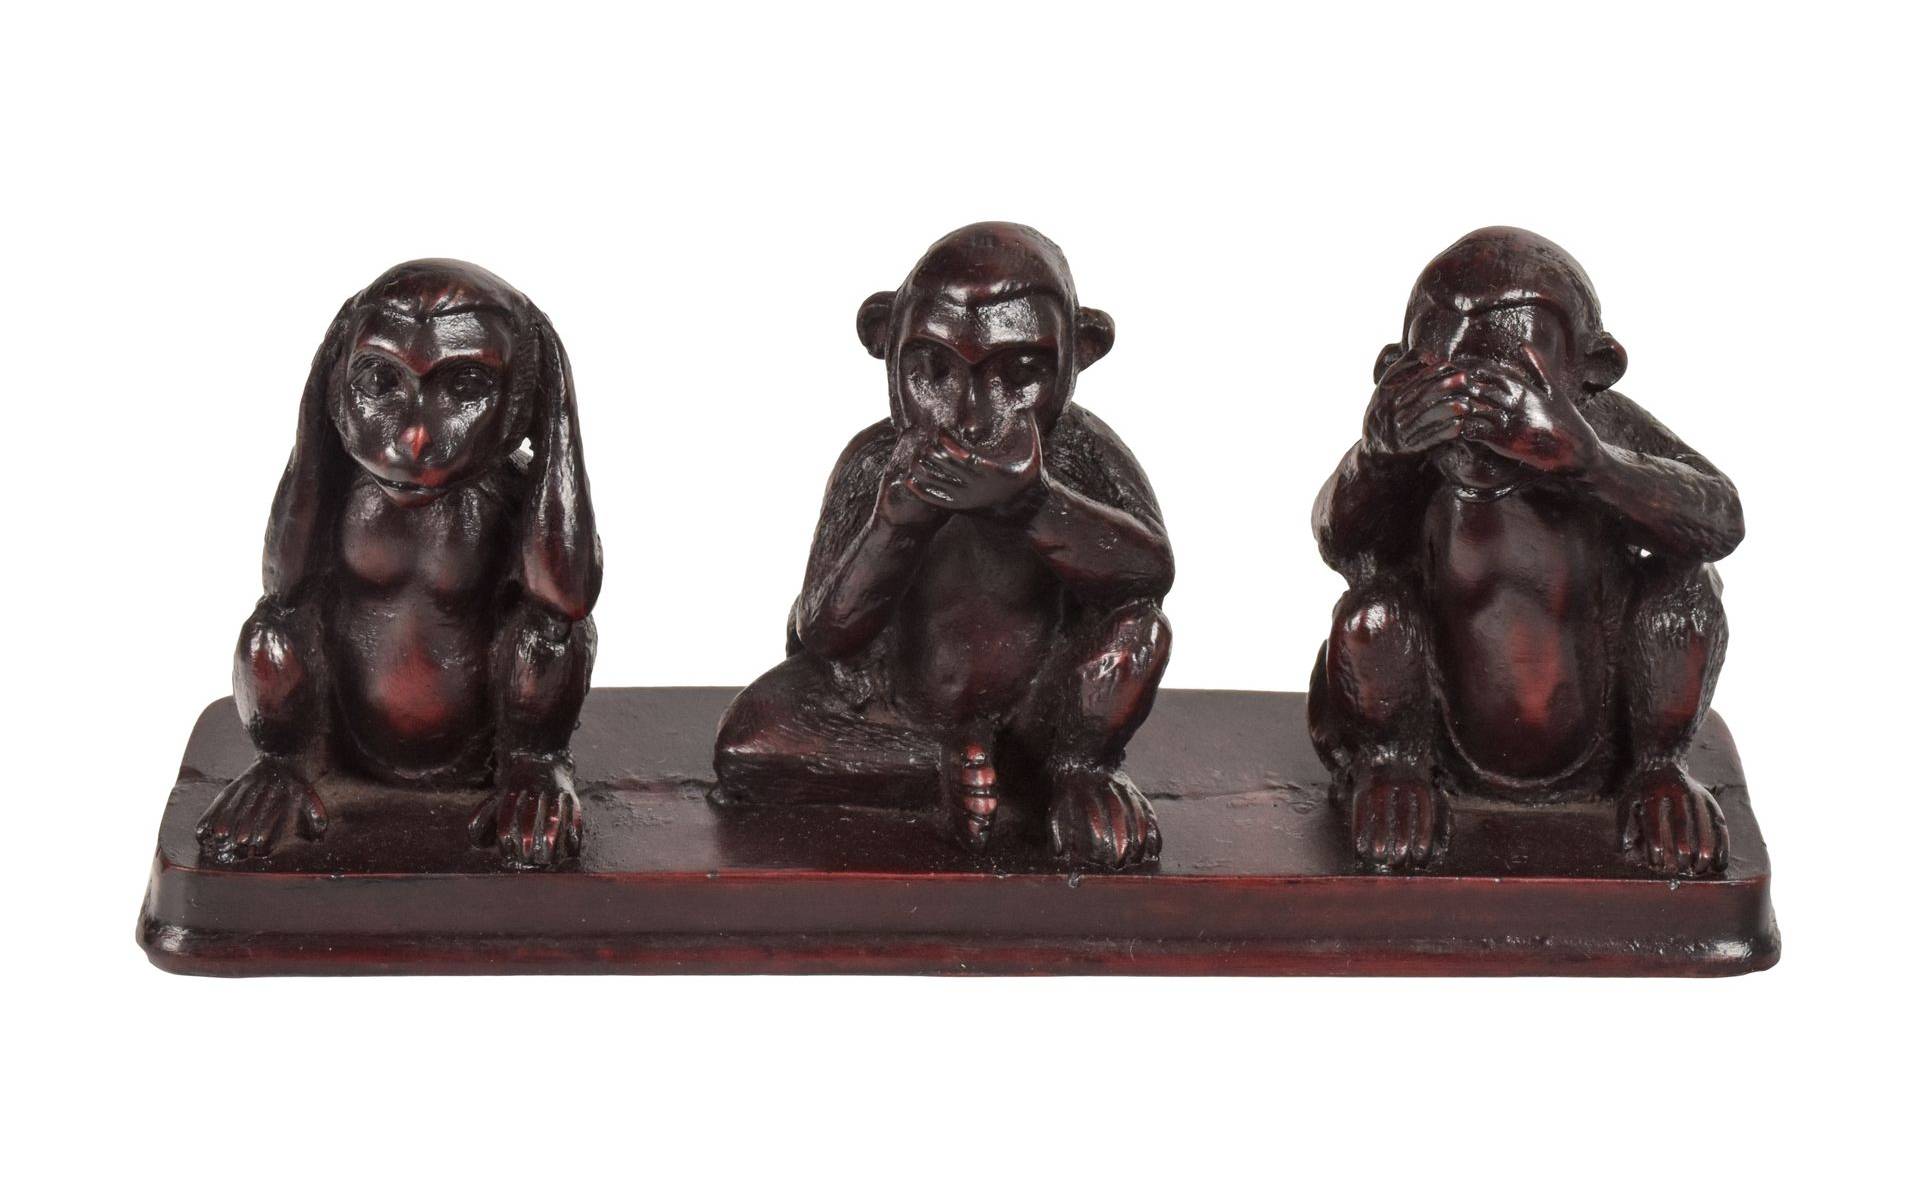 Tri múdre opice, 14x5x7cm